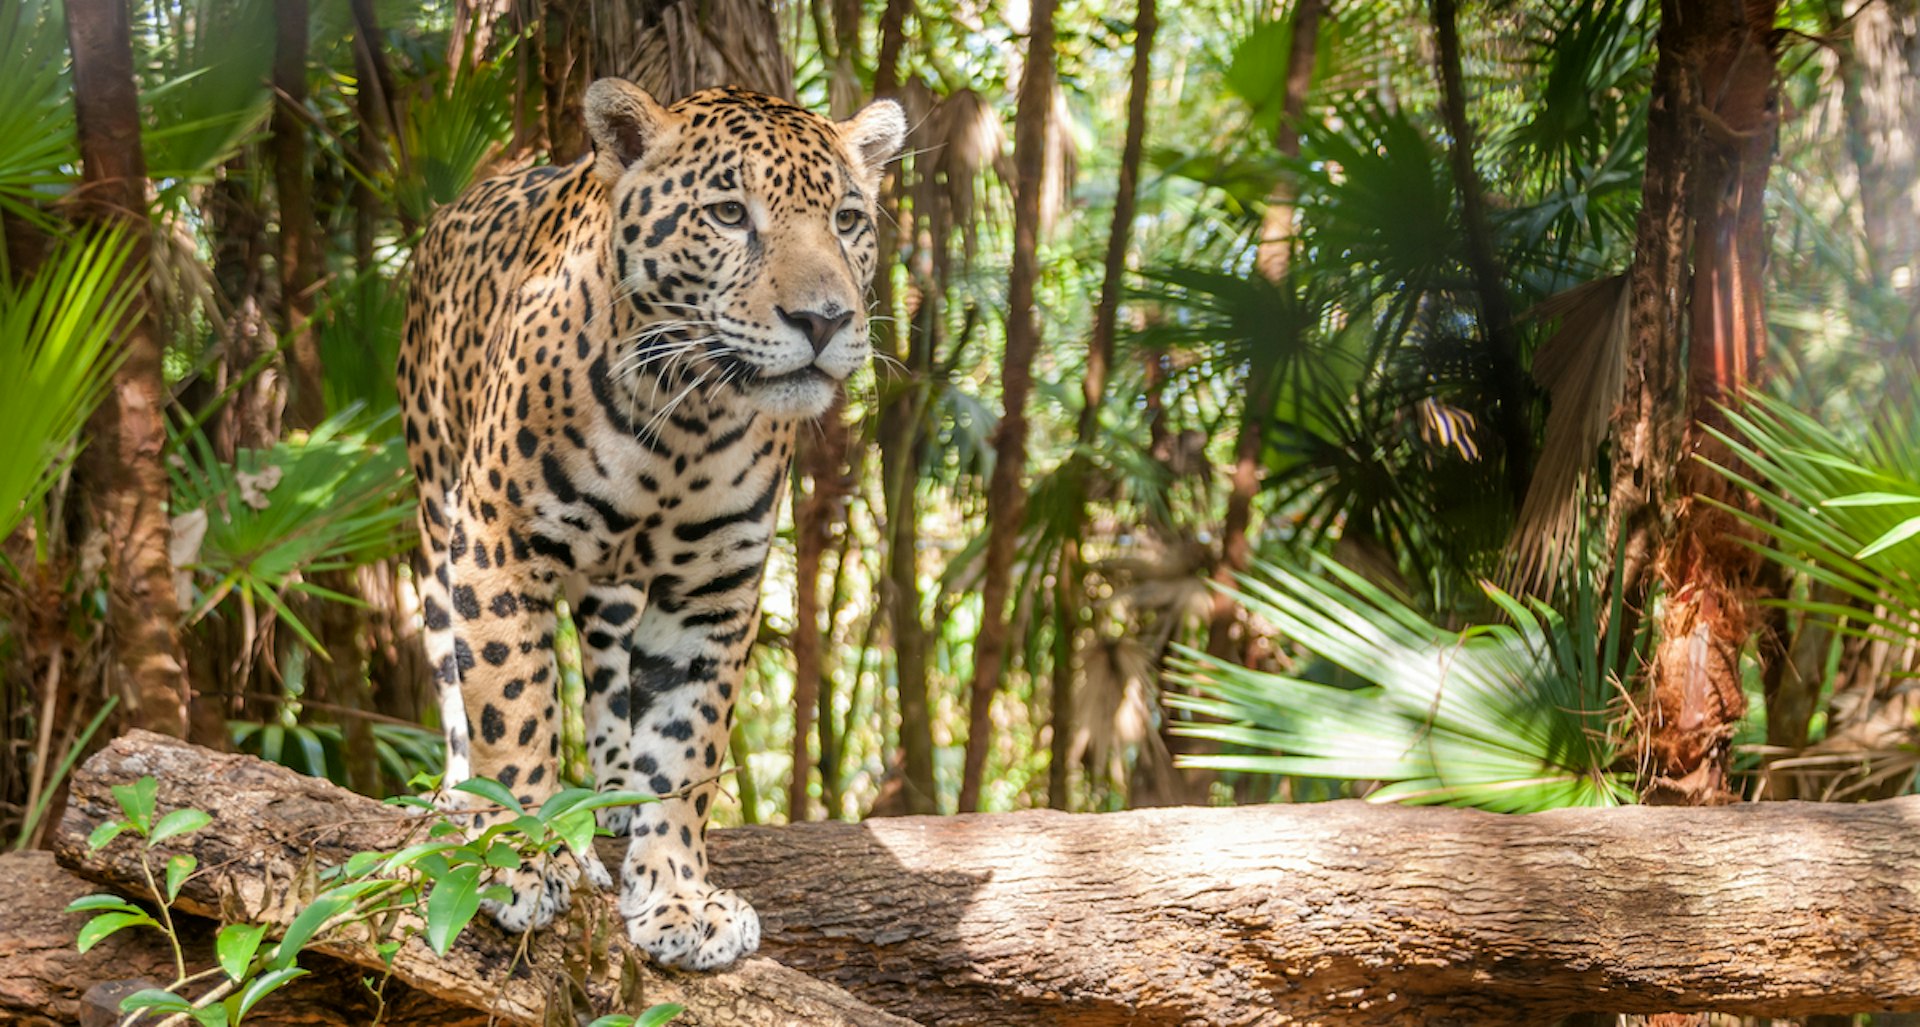 A jaguar in the jungle of Belize, Central America